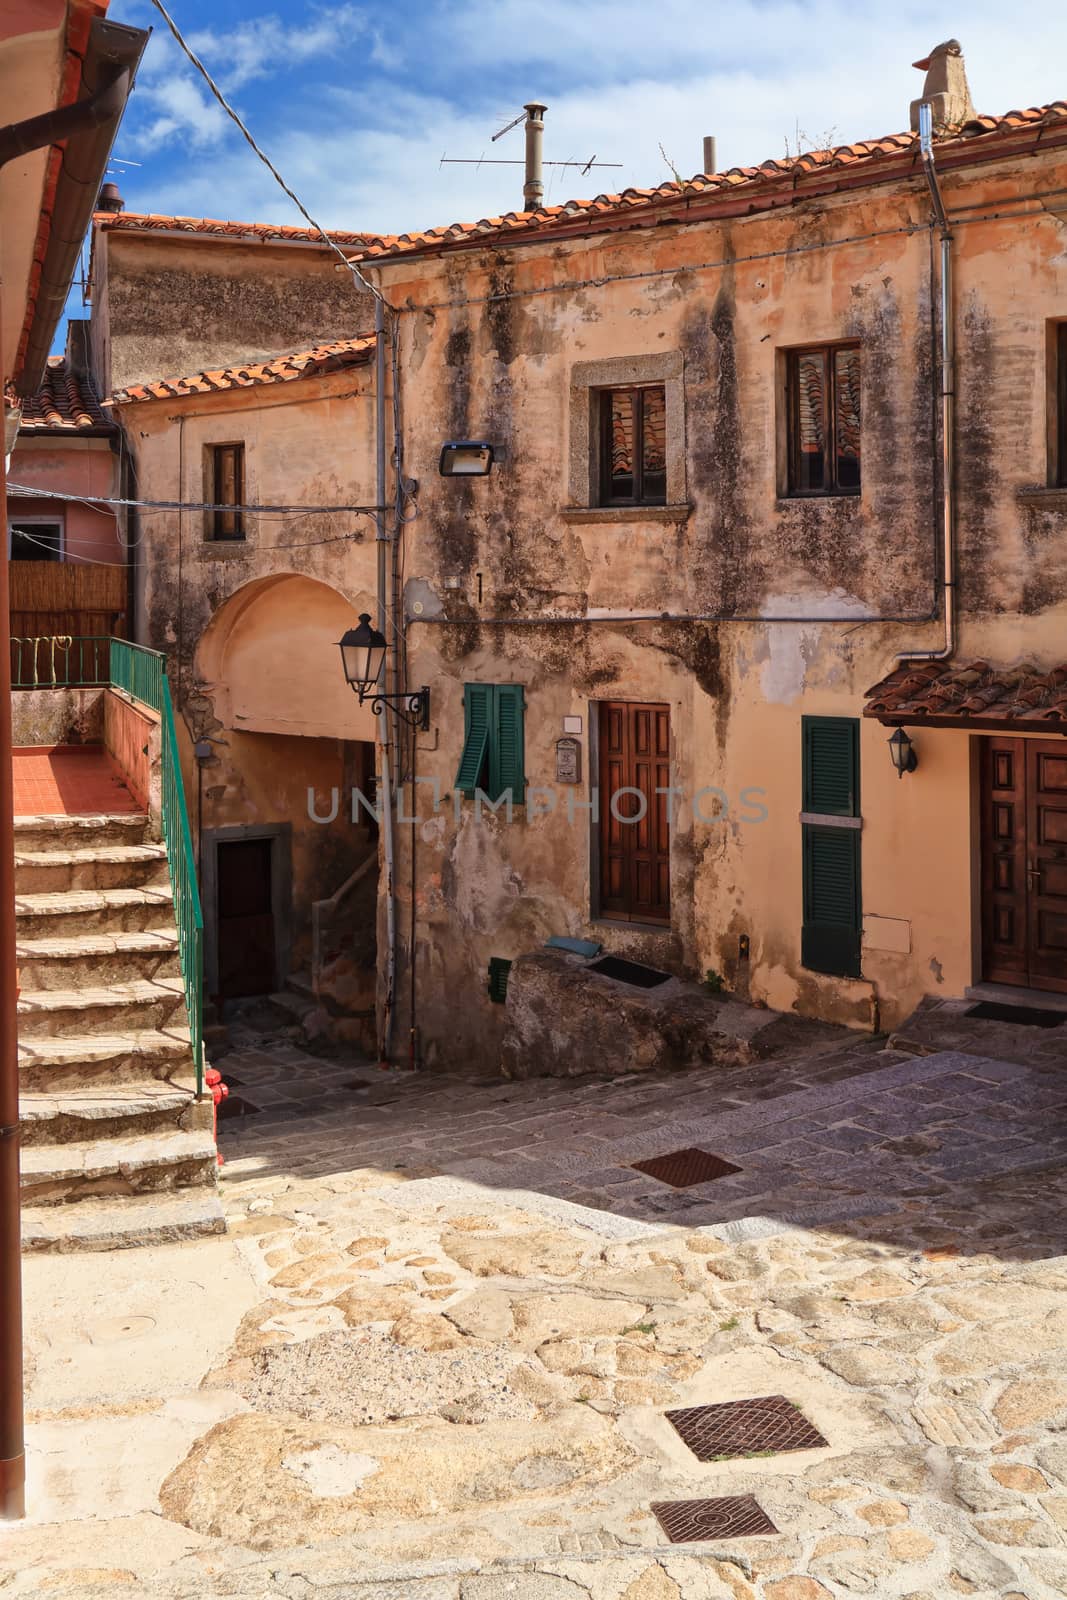 urban view in Marciana, ancient village in Elba island, Italy